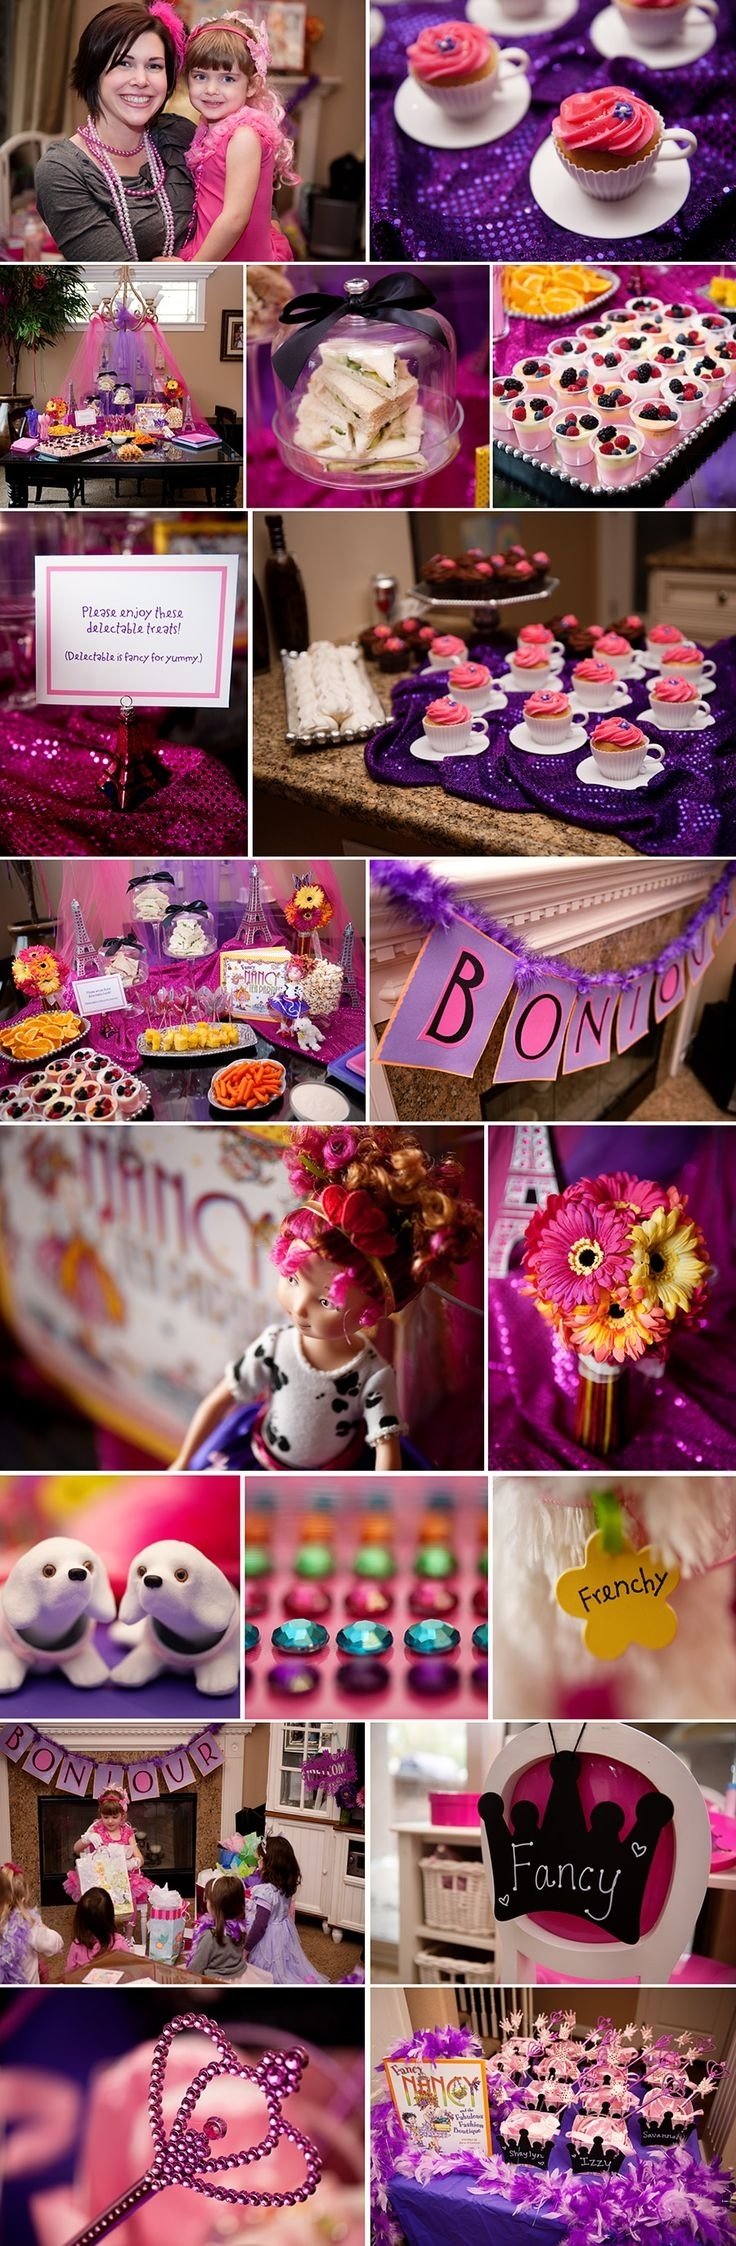 10 Attractive Fancy Nancy Tea Party Ideas 15 best fancy nancy party ideas images on pinterest birthday party 2022